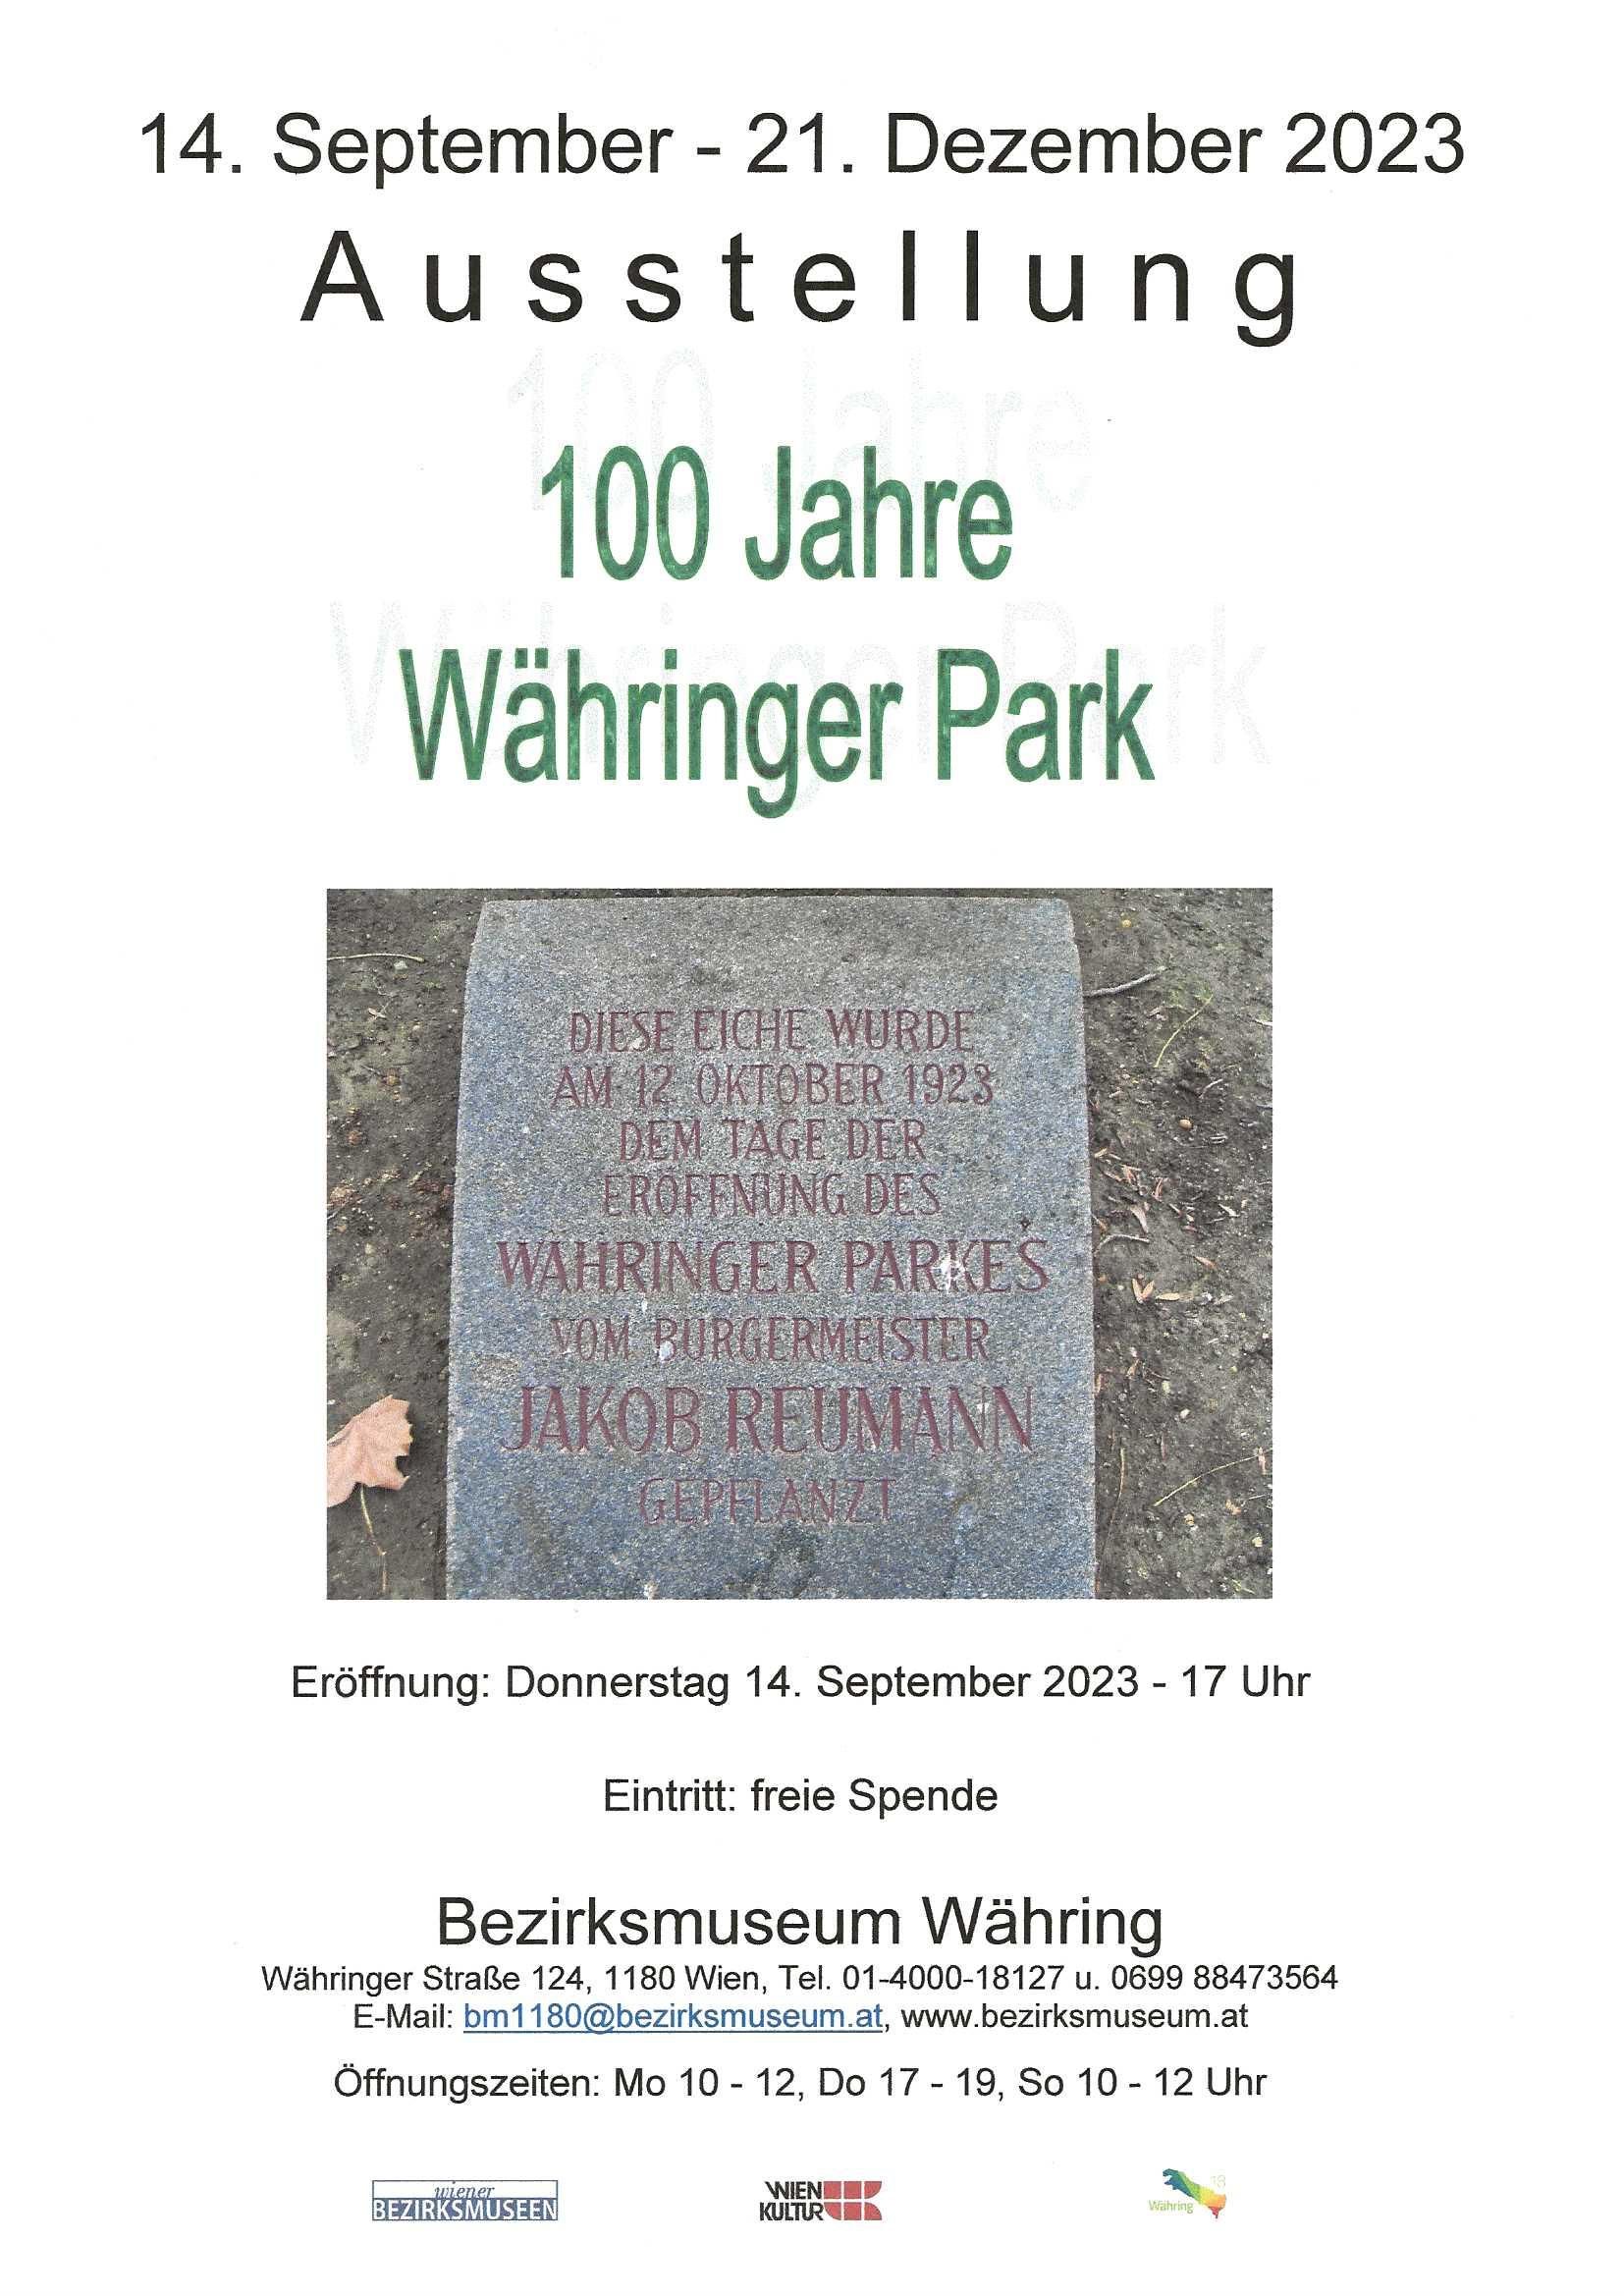 Ausstellung: 100 Jahre Währinger Park, Bezirksmuseum Währing